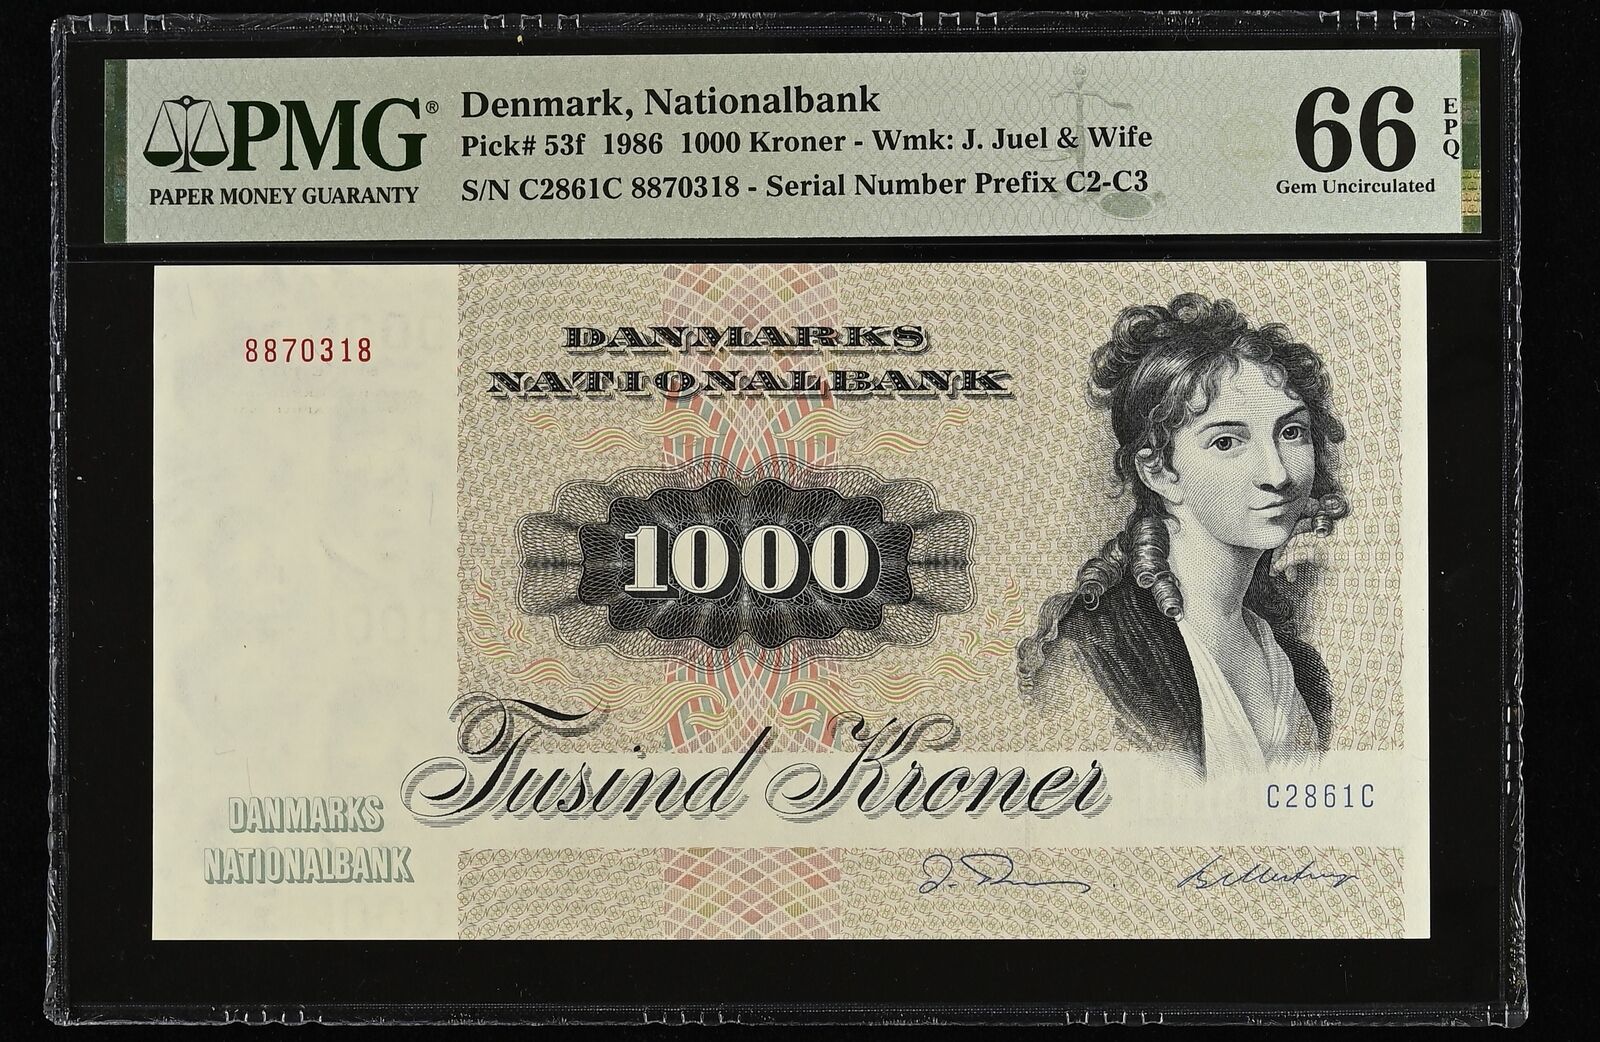 Denmark 1000 Kroner 1986 P 53 f Gem UNC PMG 66 EPQ – Noteshobby